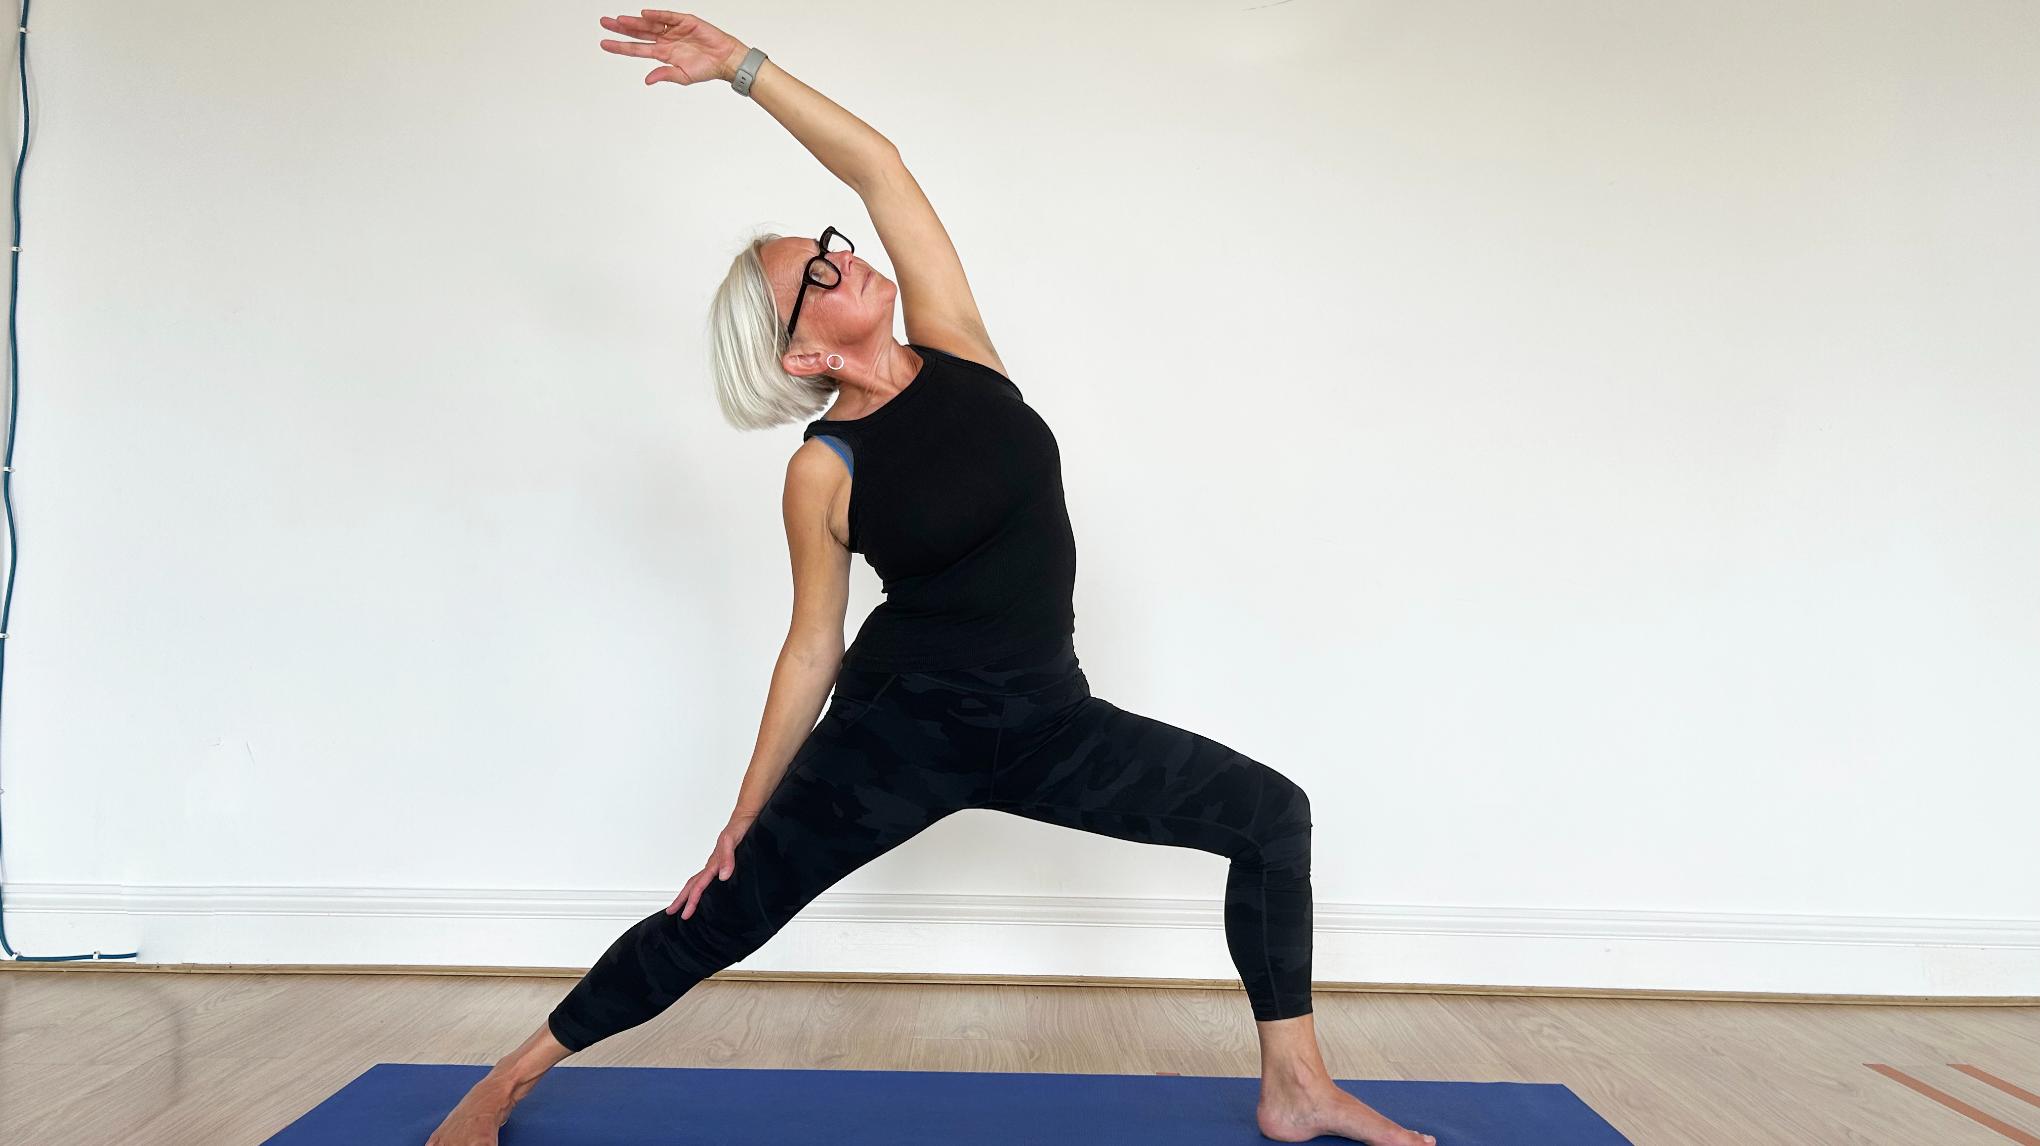 mindful yoga mini-retreat – grounding & presence